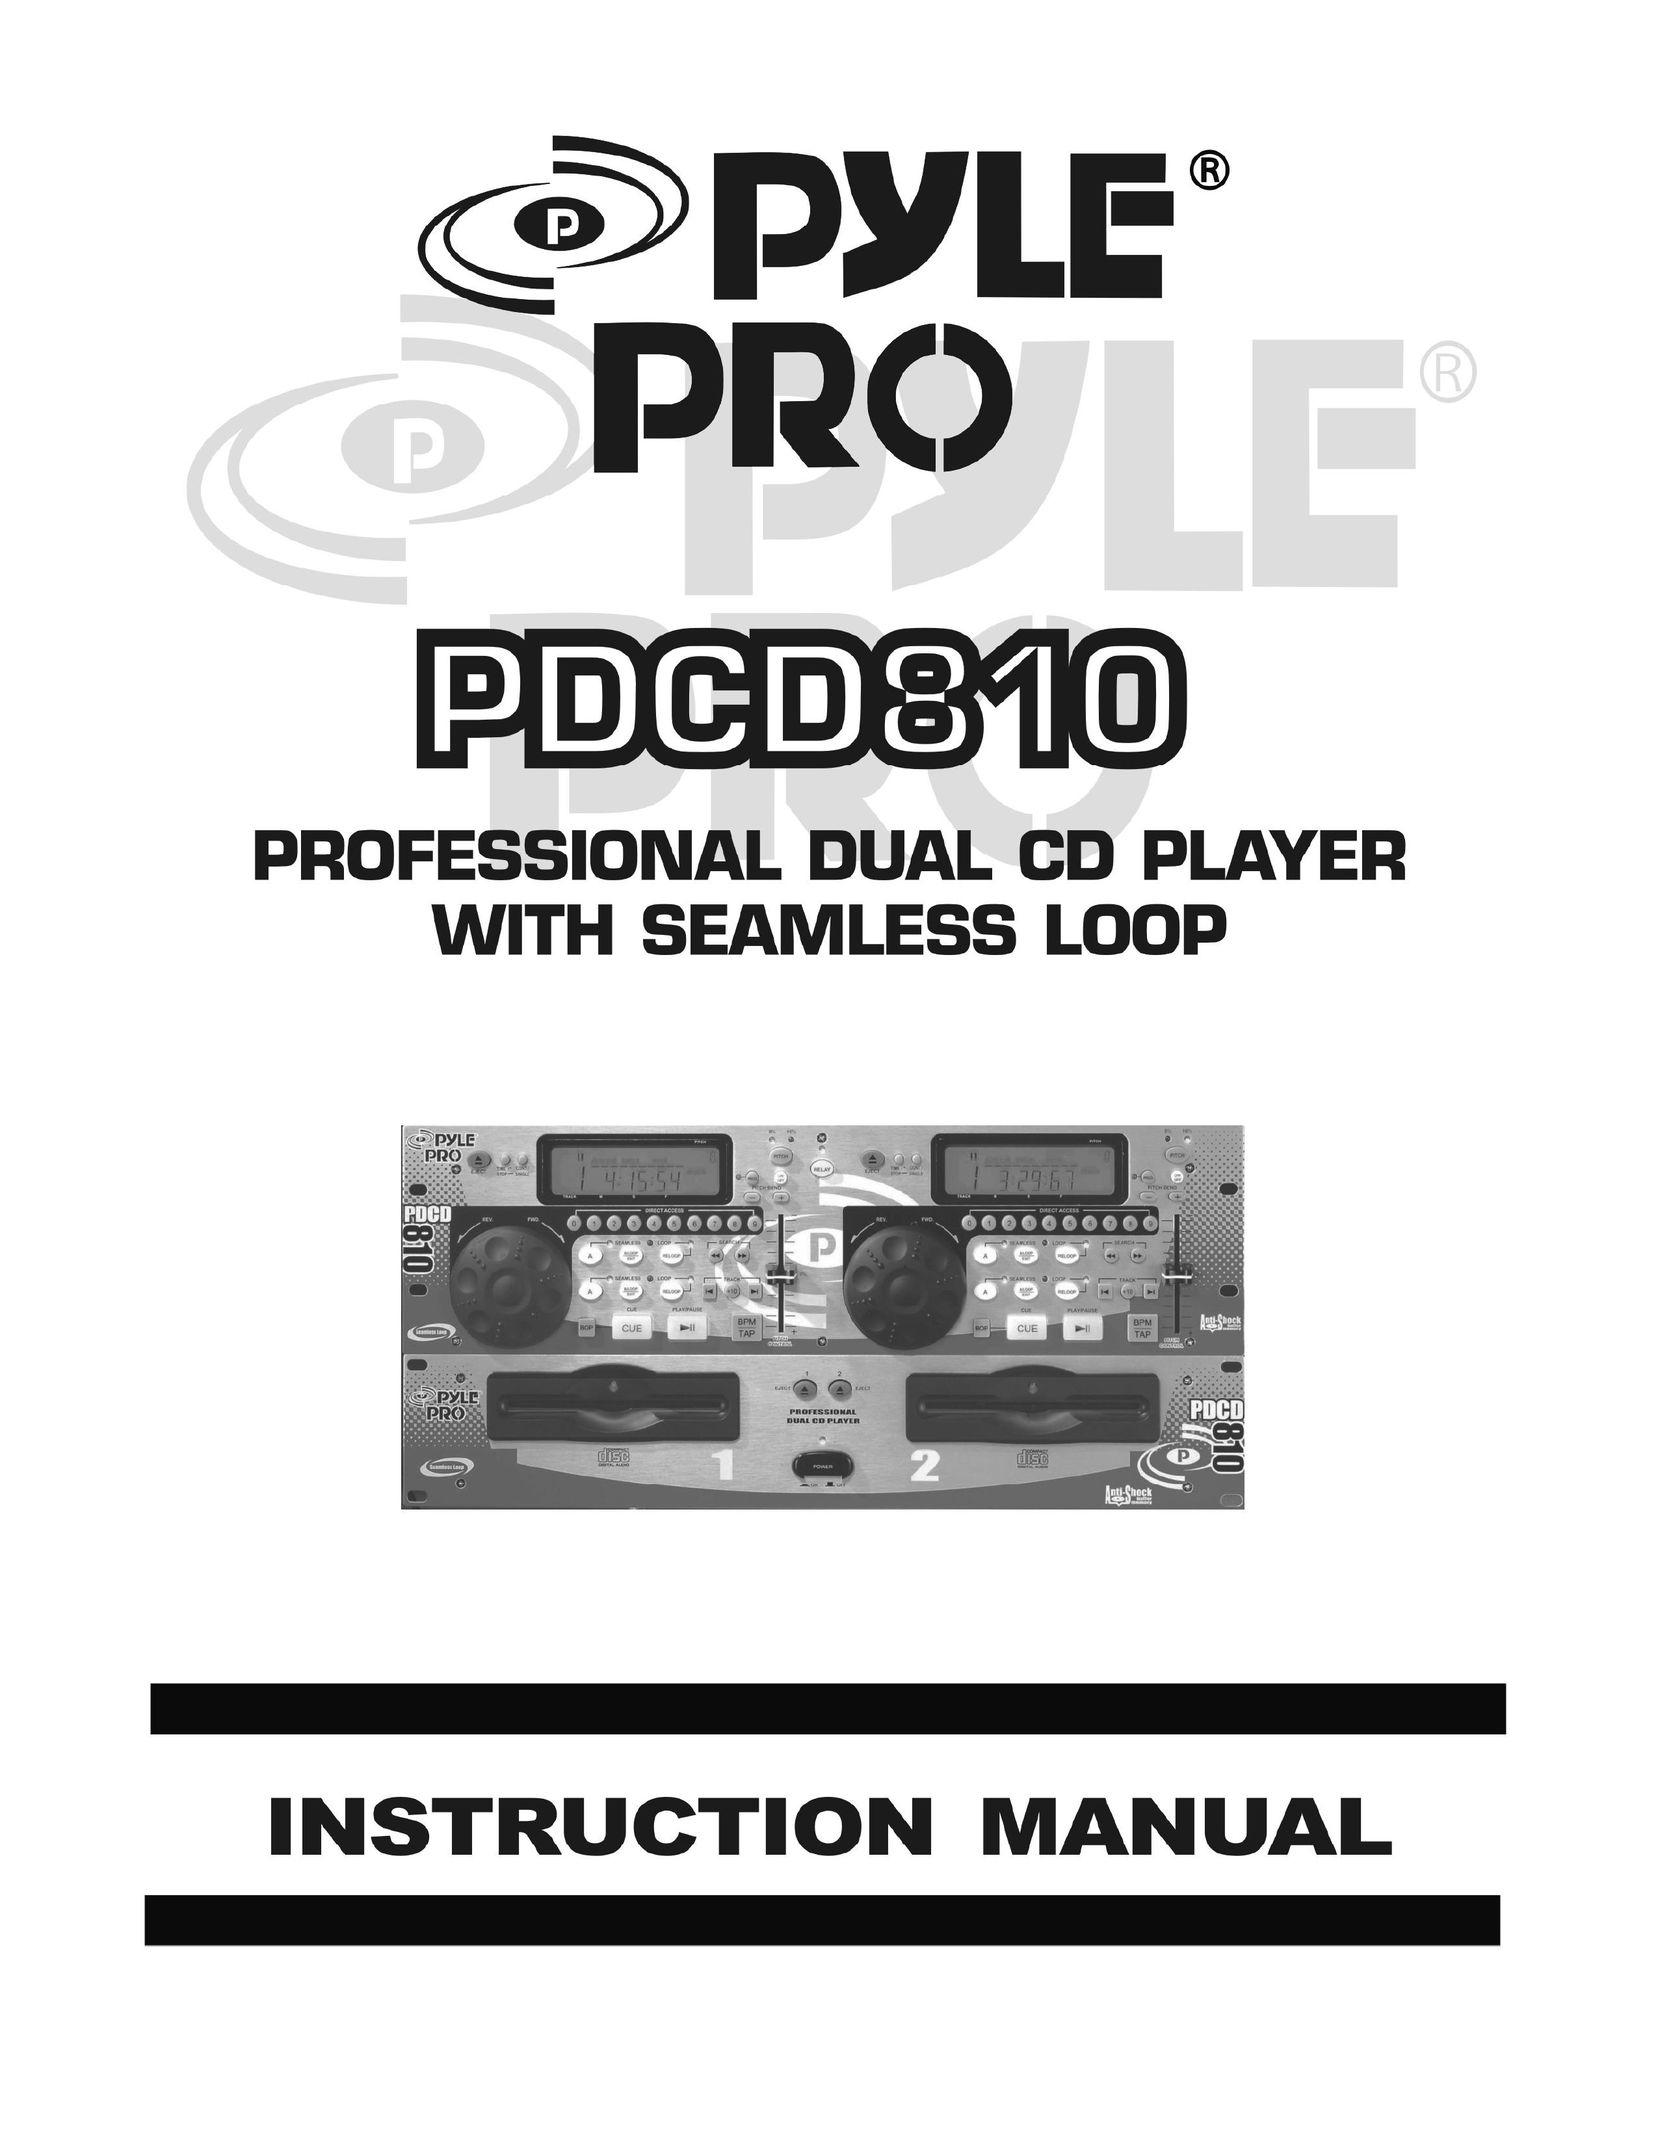 Radio Shack PDCD810 CD Player User Manual